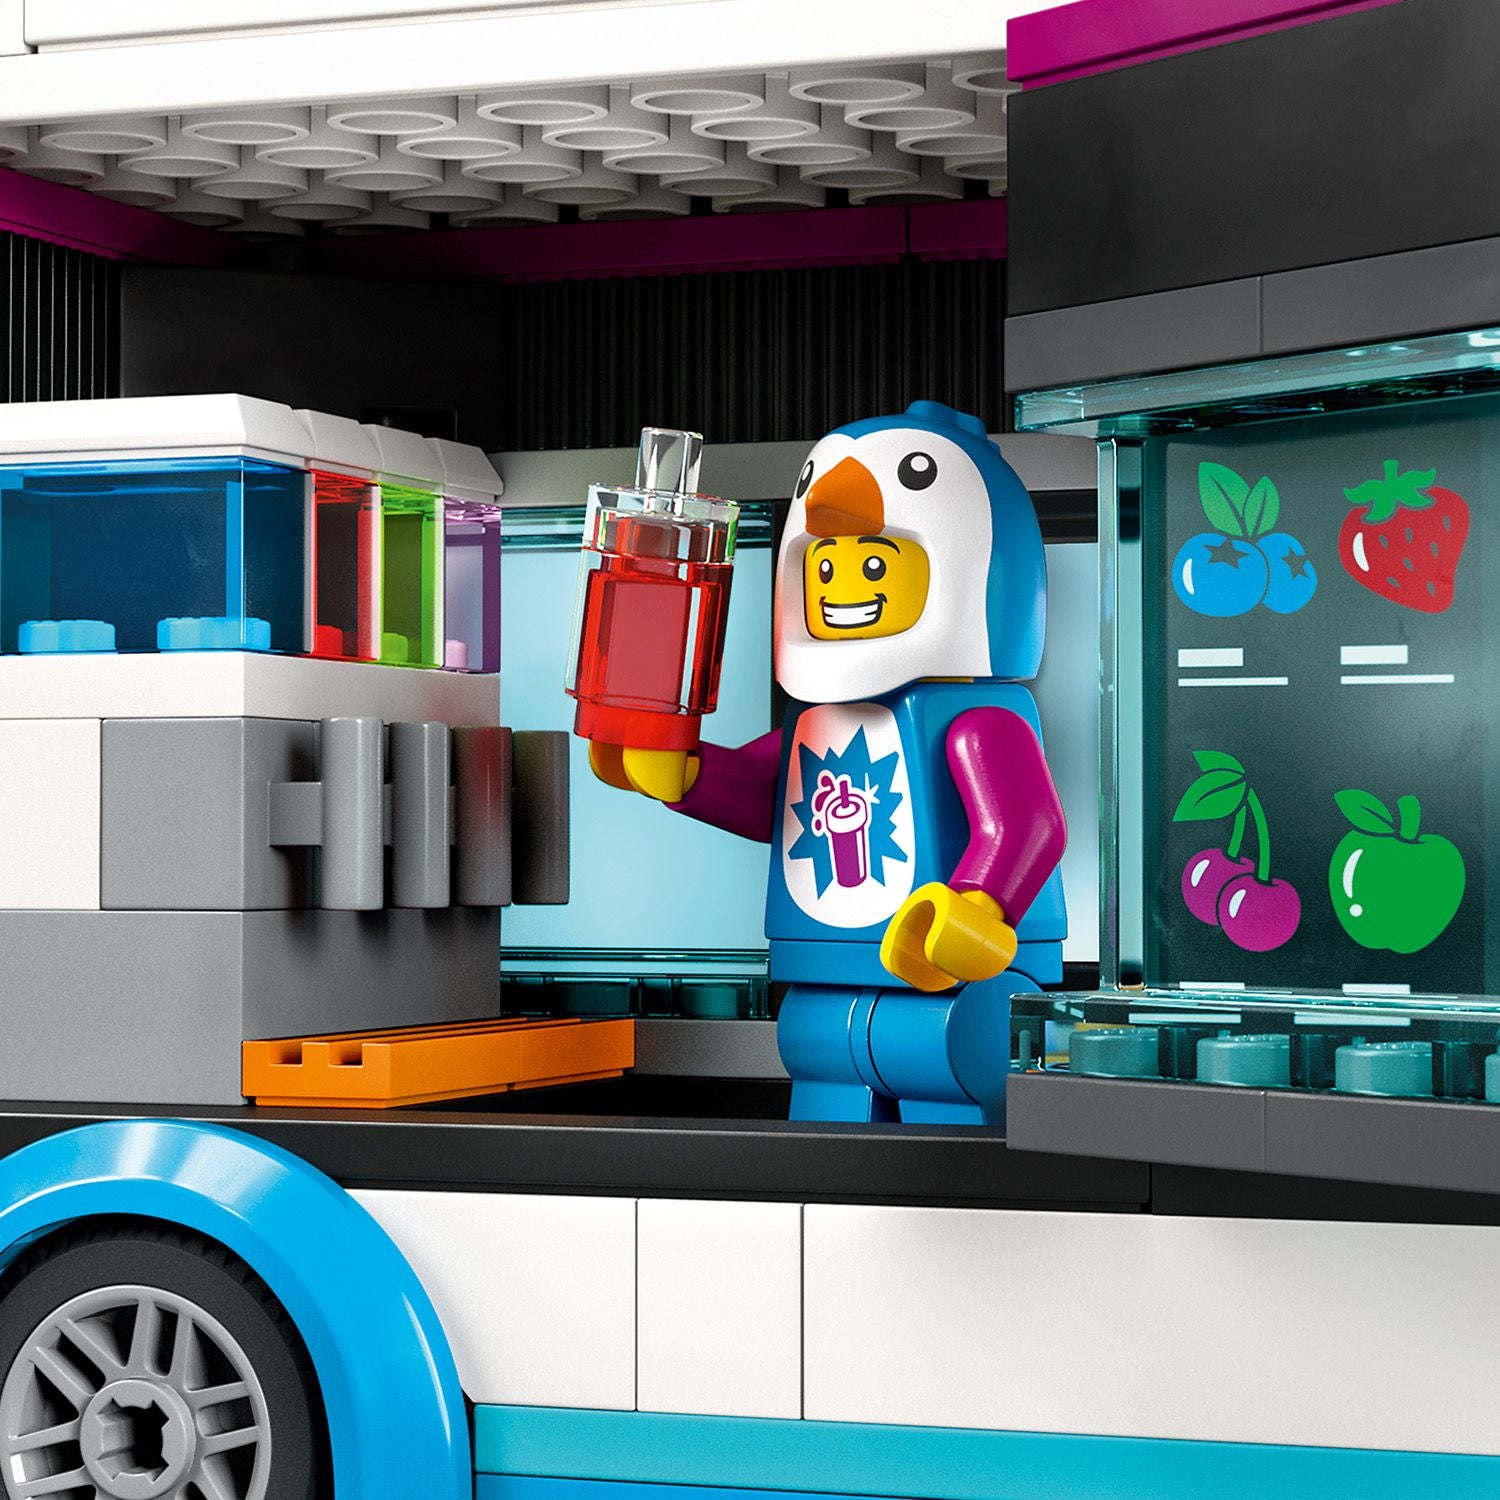 LEGO® City Great Vehicles: Penguin Slushy Van